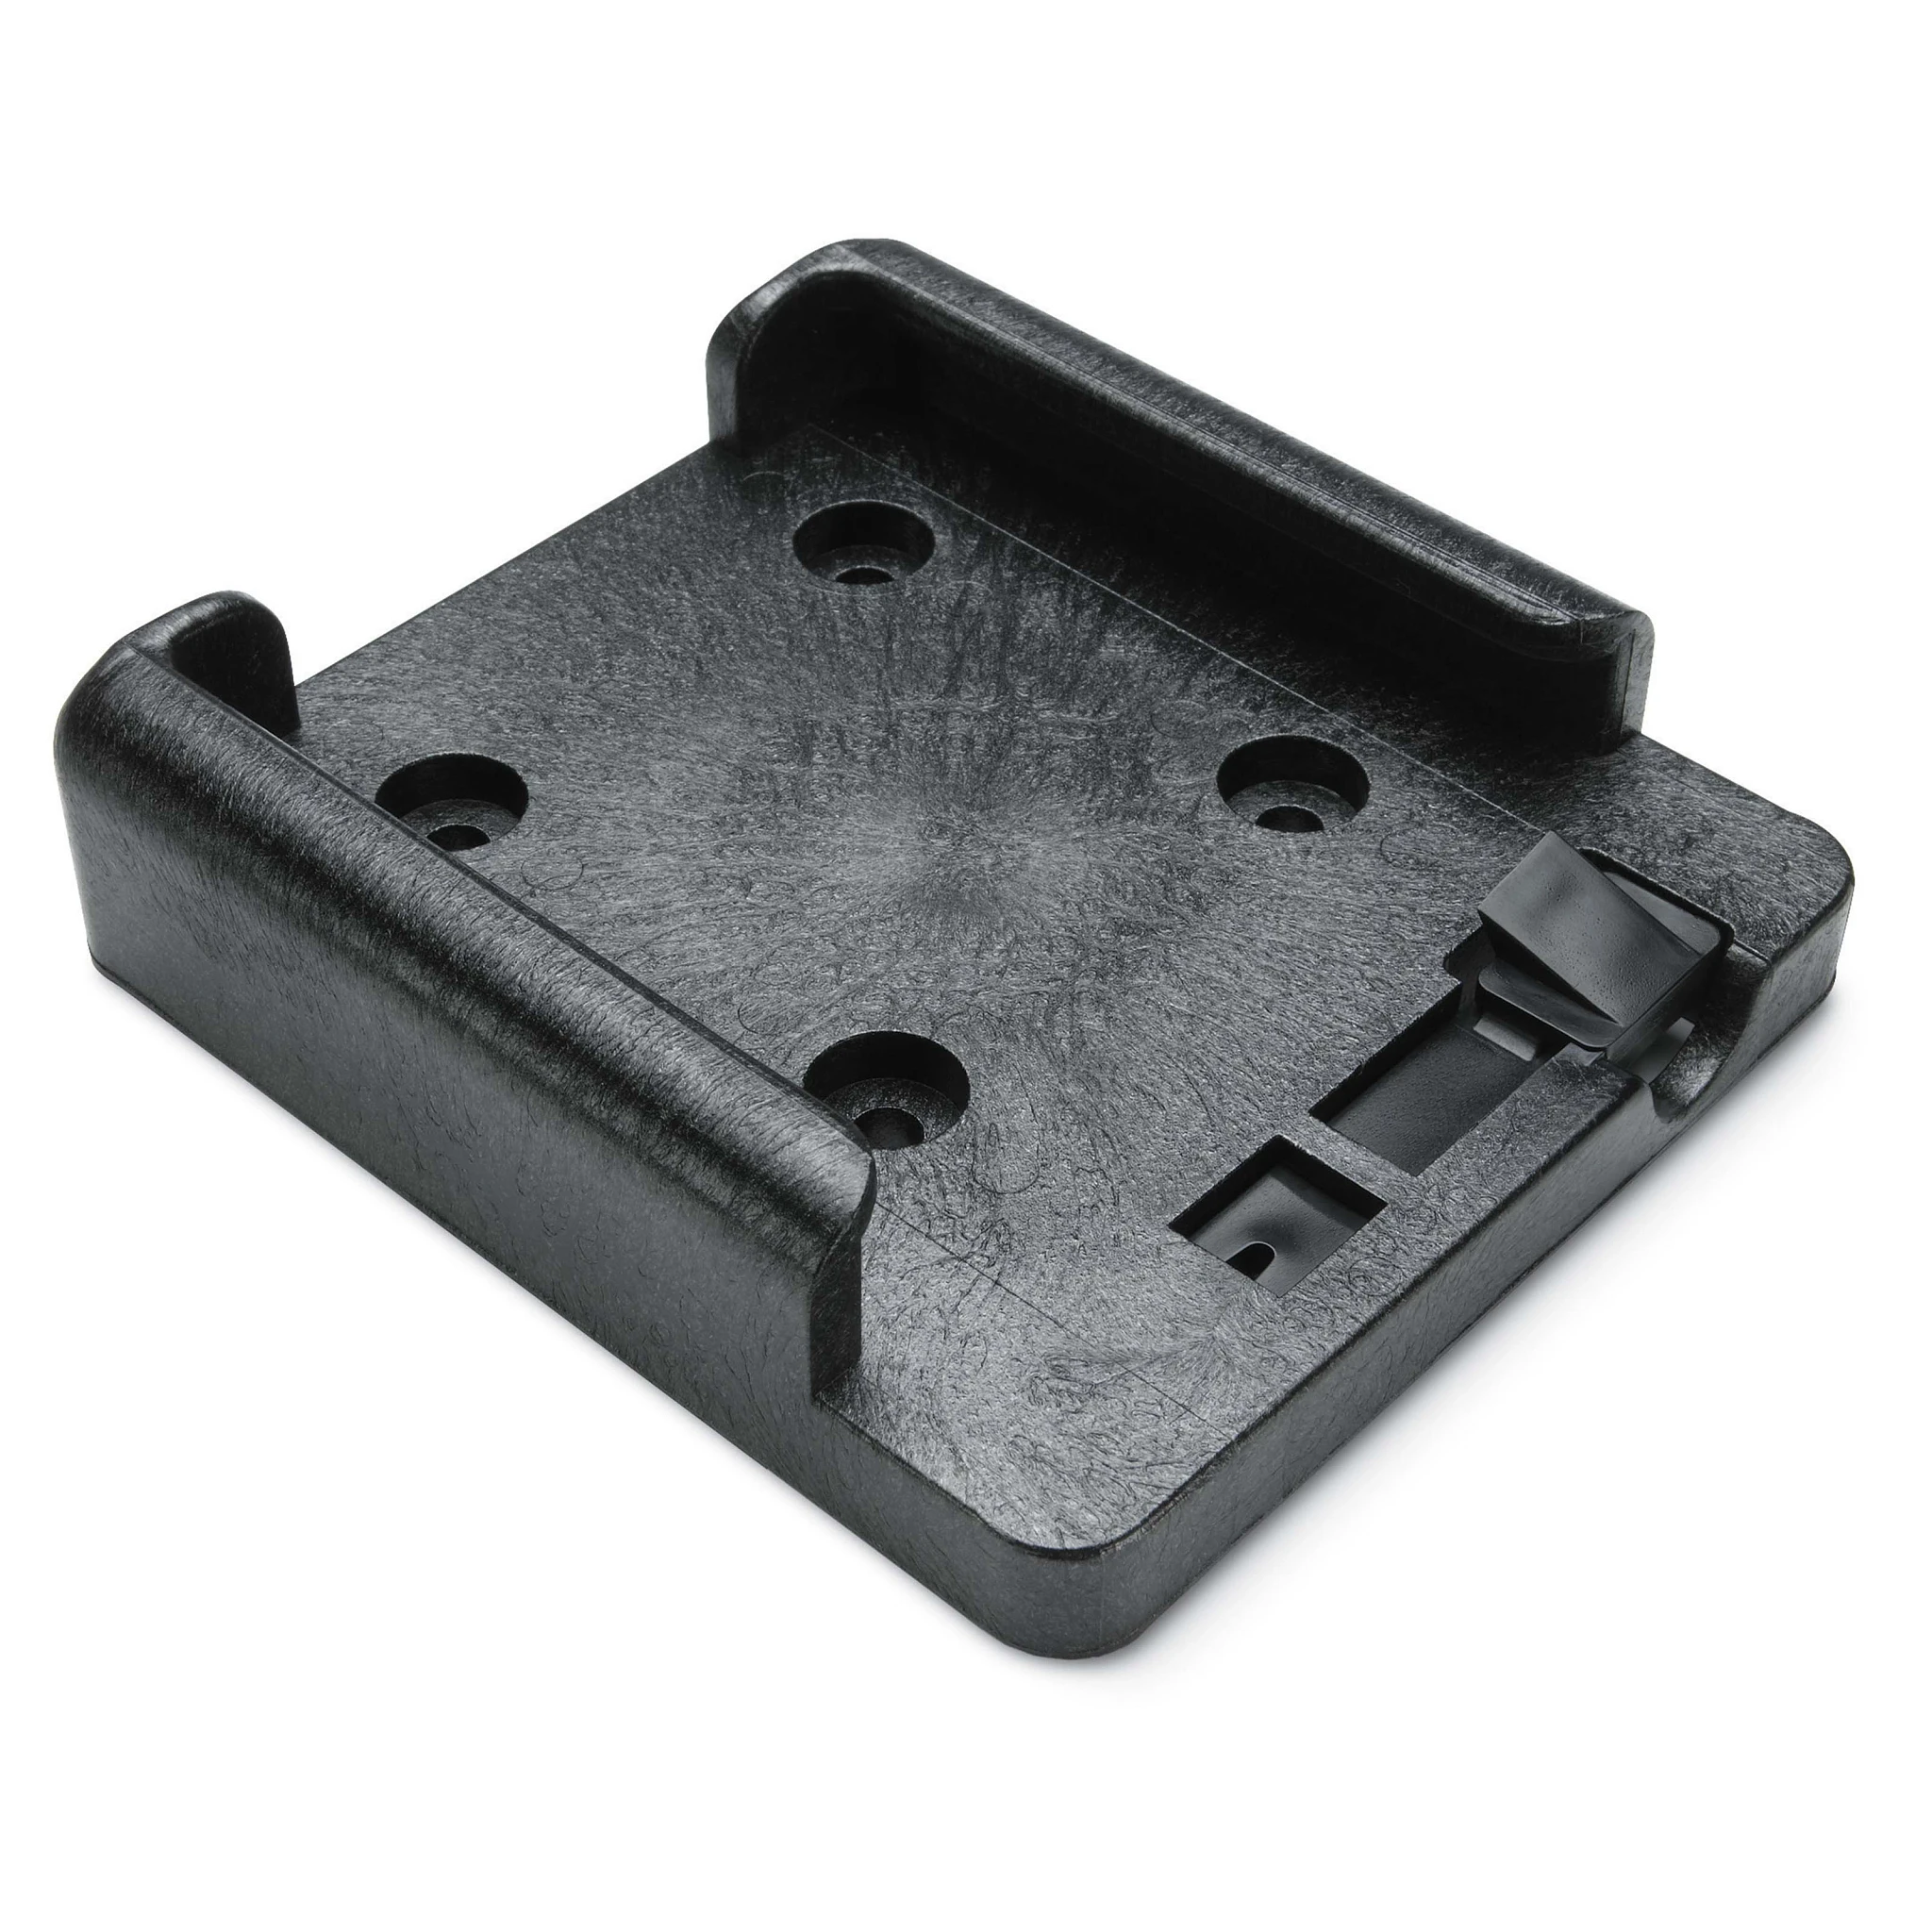 Black composite tab lock base